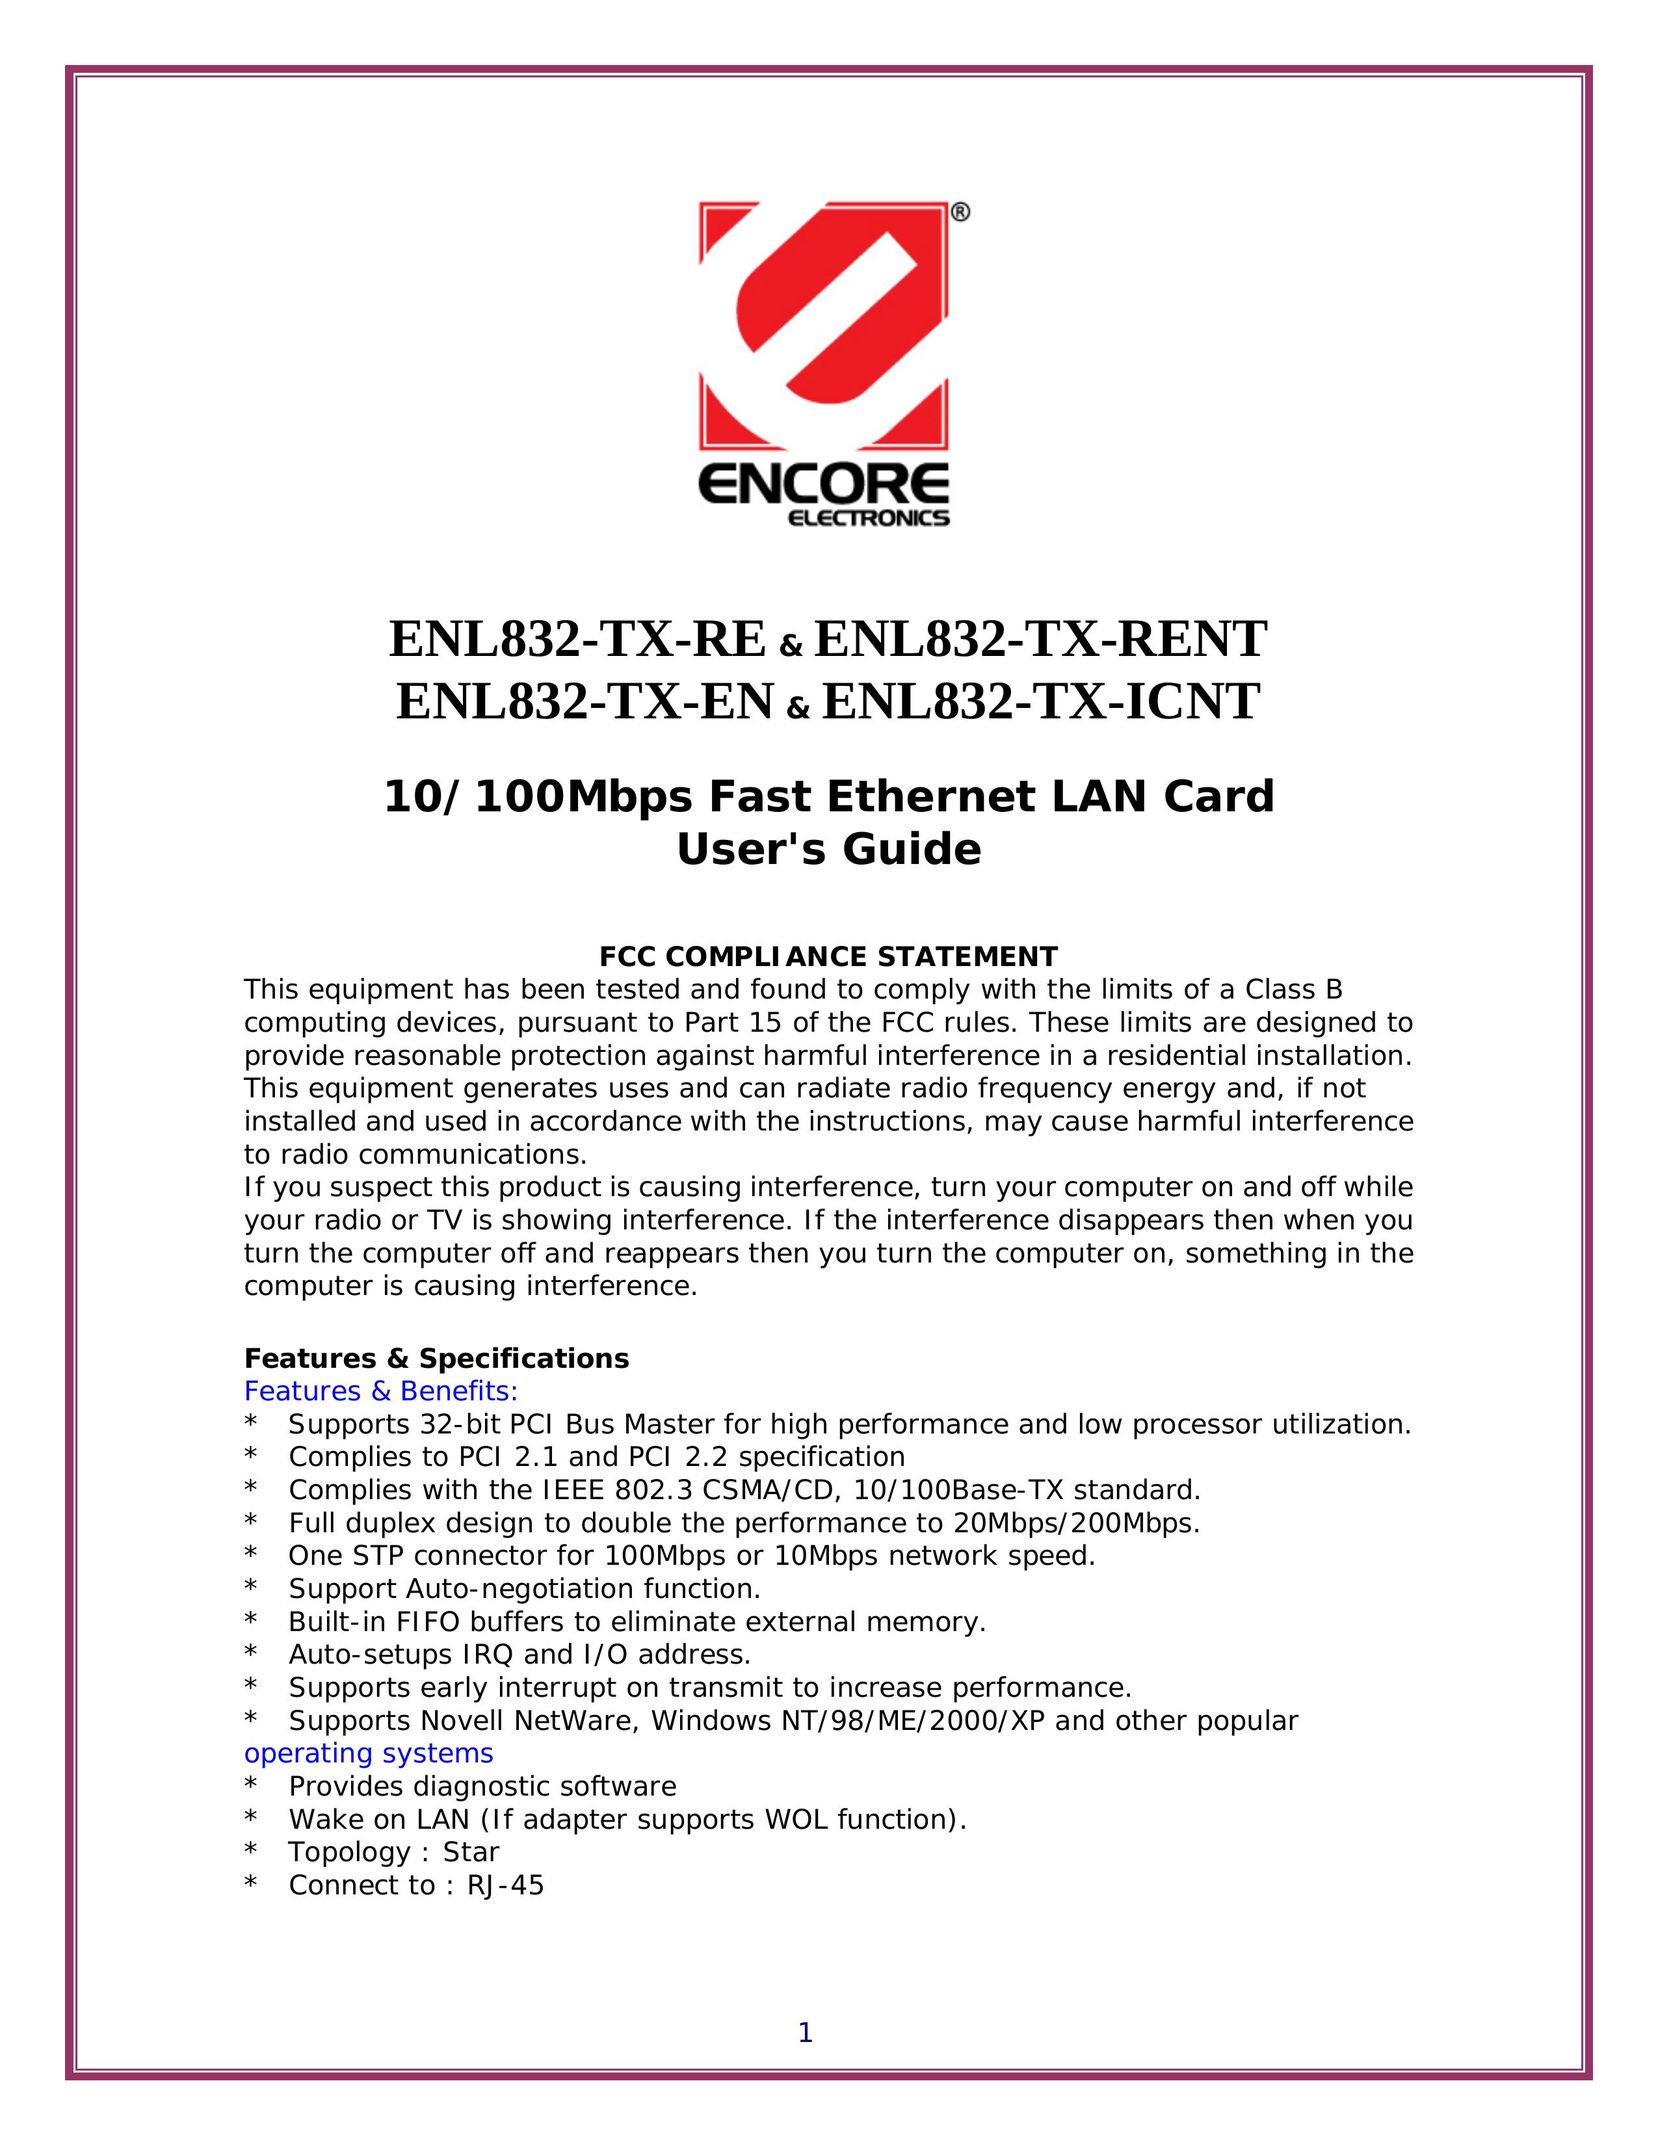 Encore electronic ENL832-TX-RENT Network Card User Manual